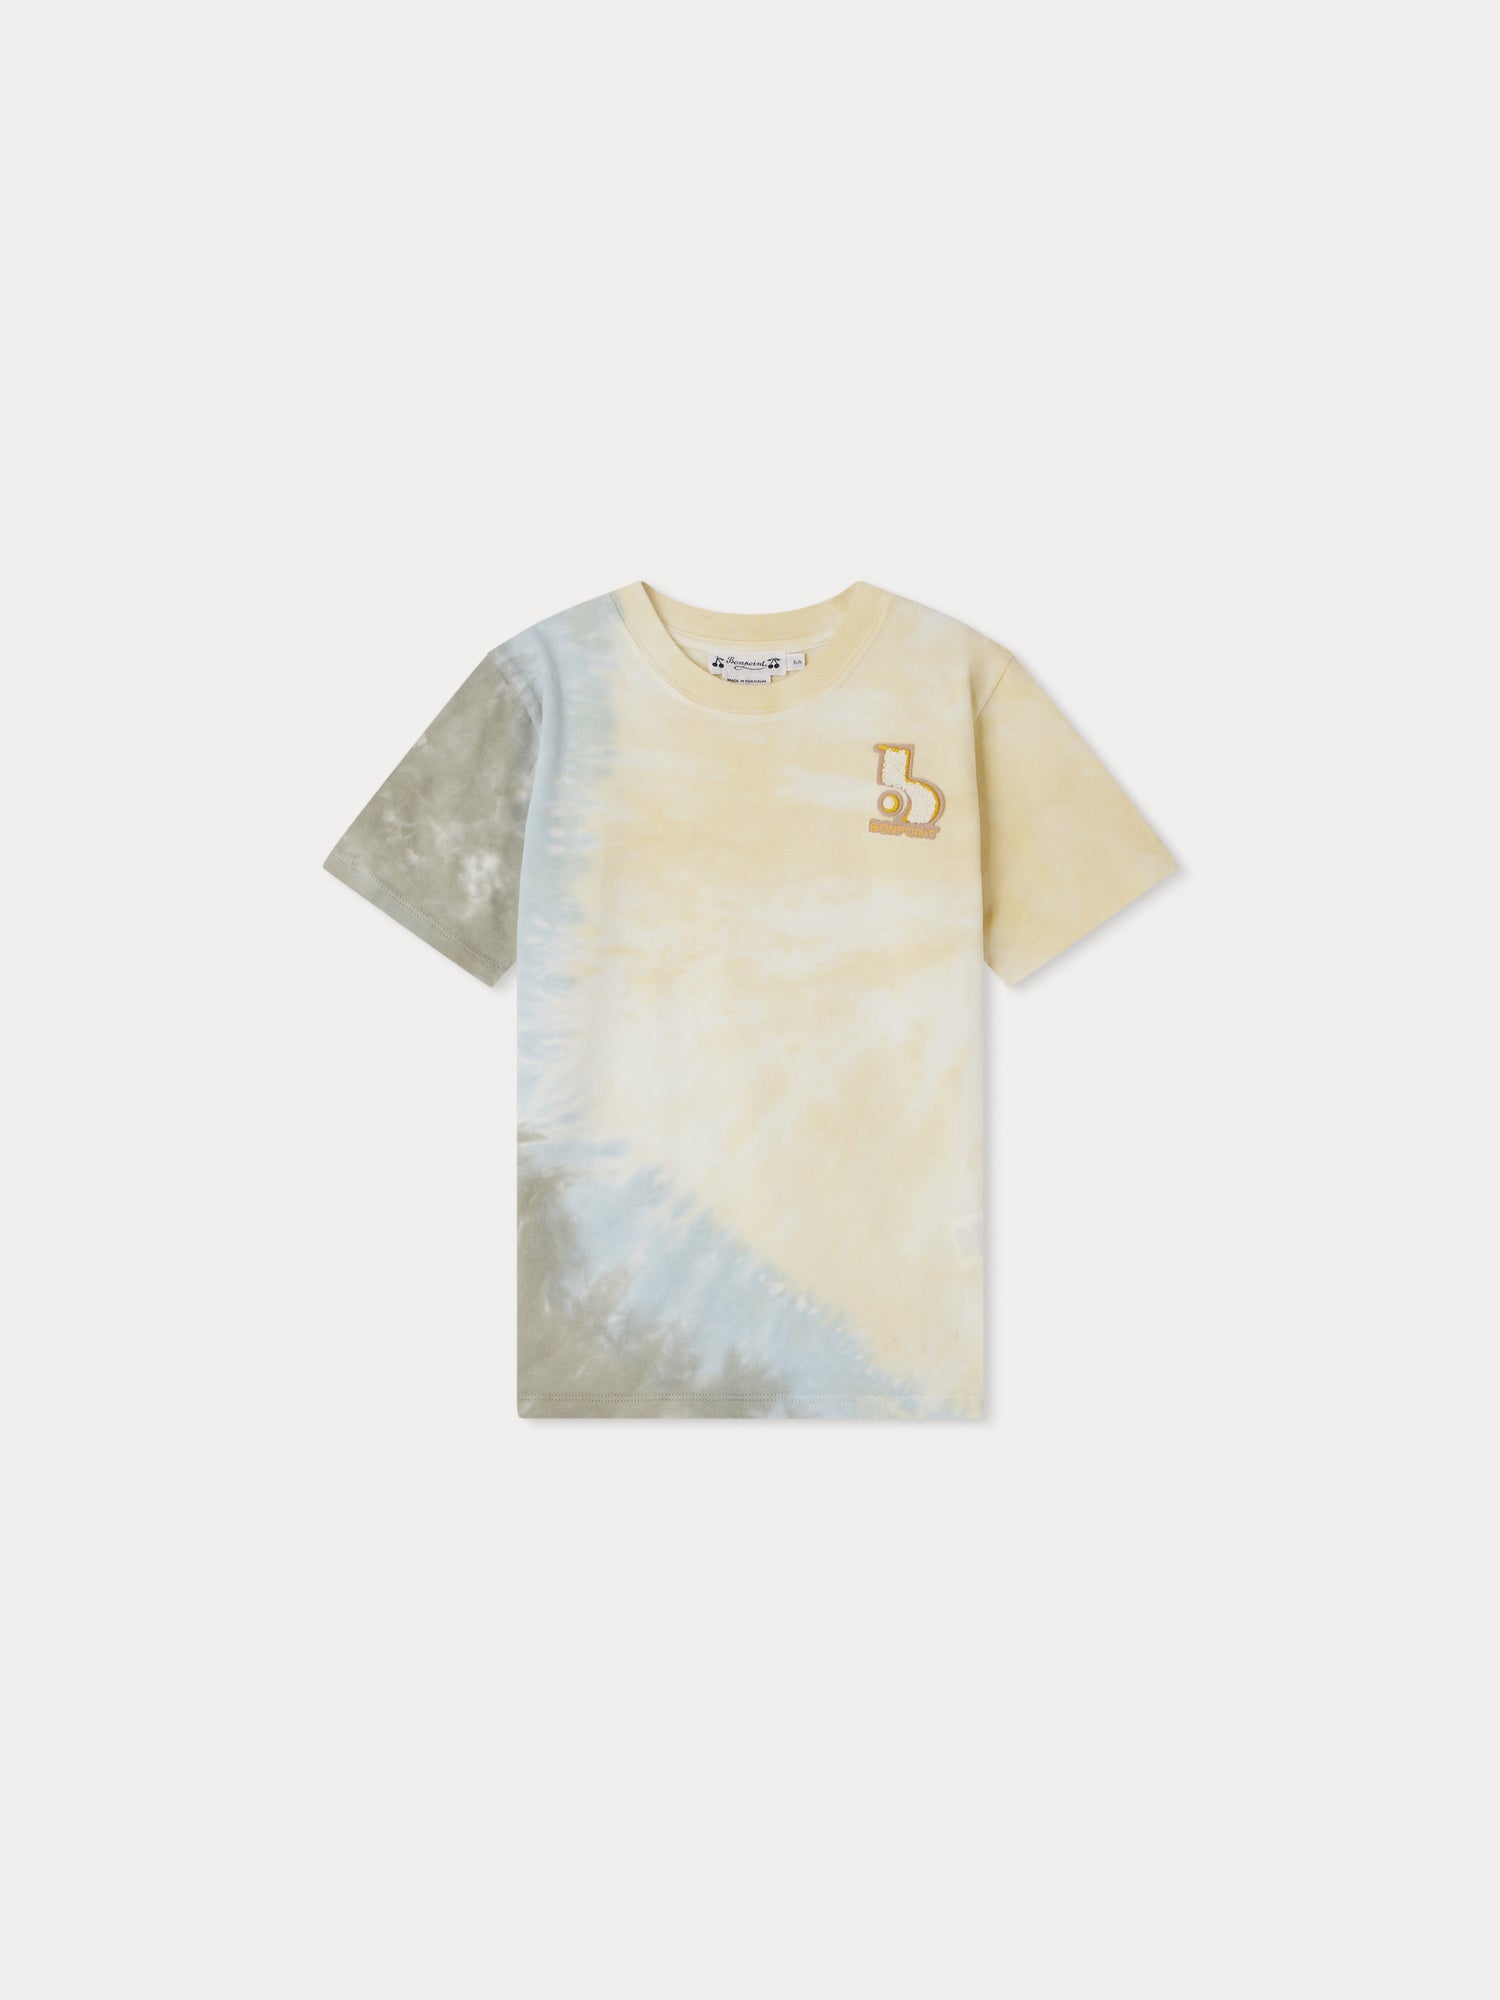 Thibald T-Shirt lemon • Bonpoint